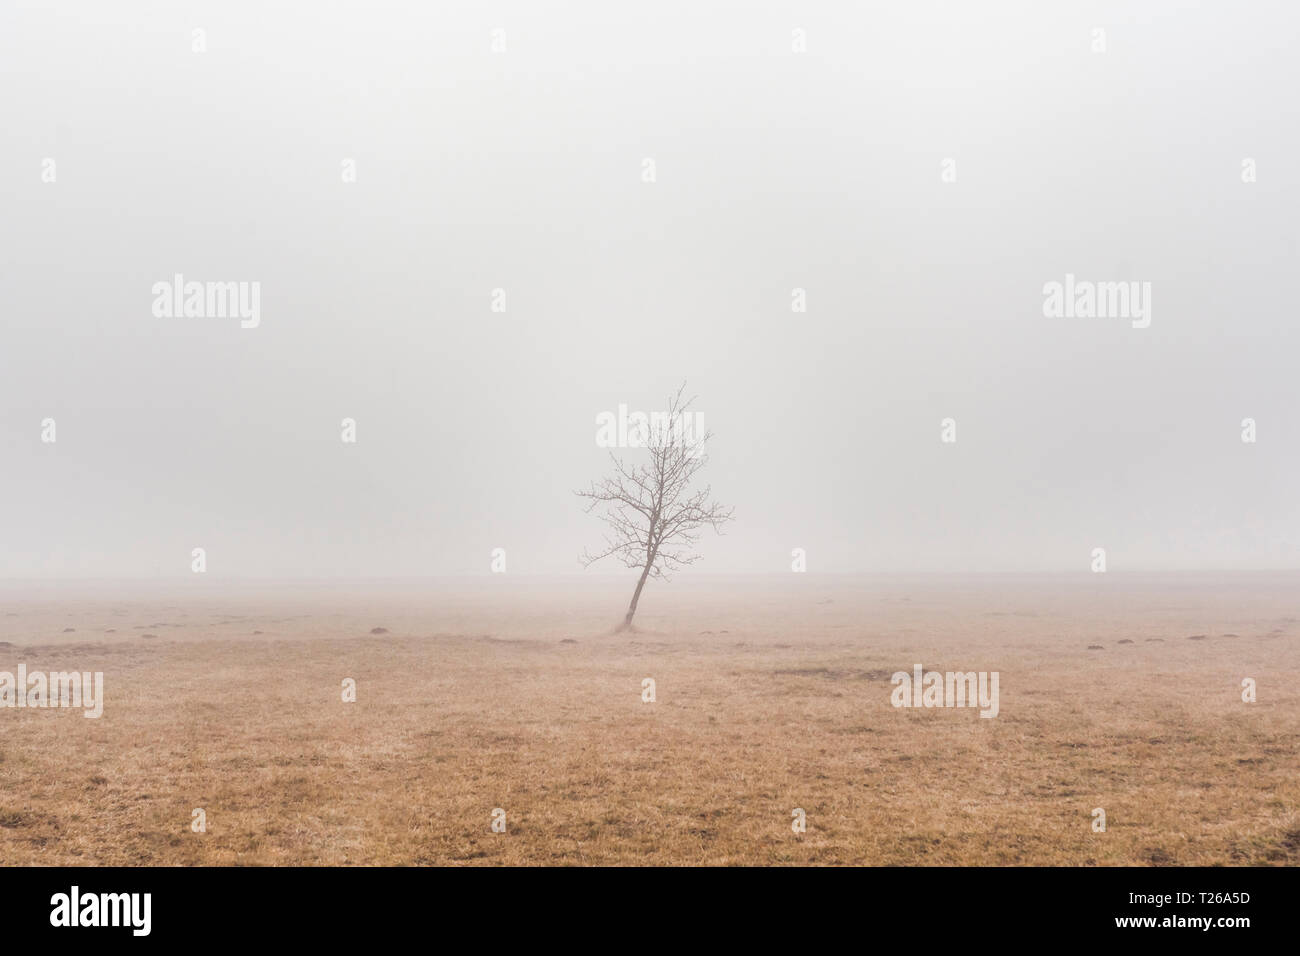 Slovenia, Begunje na Gorenjskem, rural area, lonely tree and fog in a winter day Stock Photo